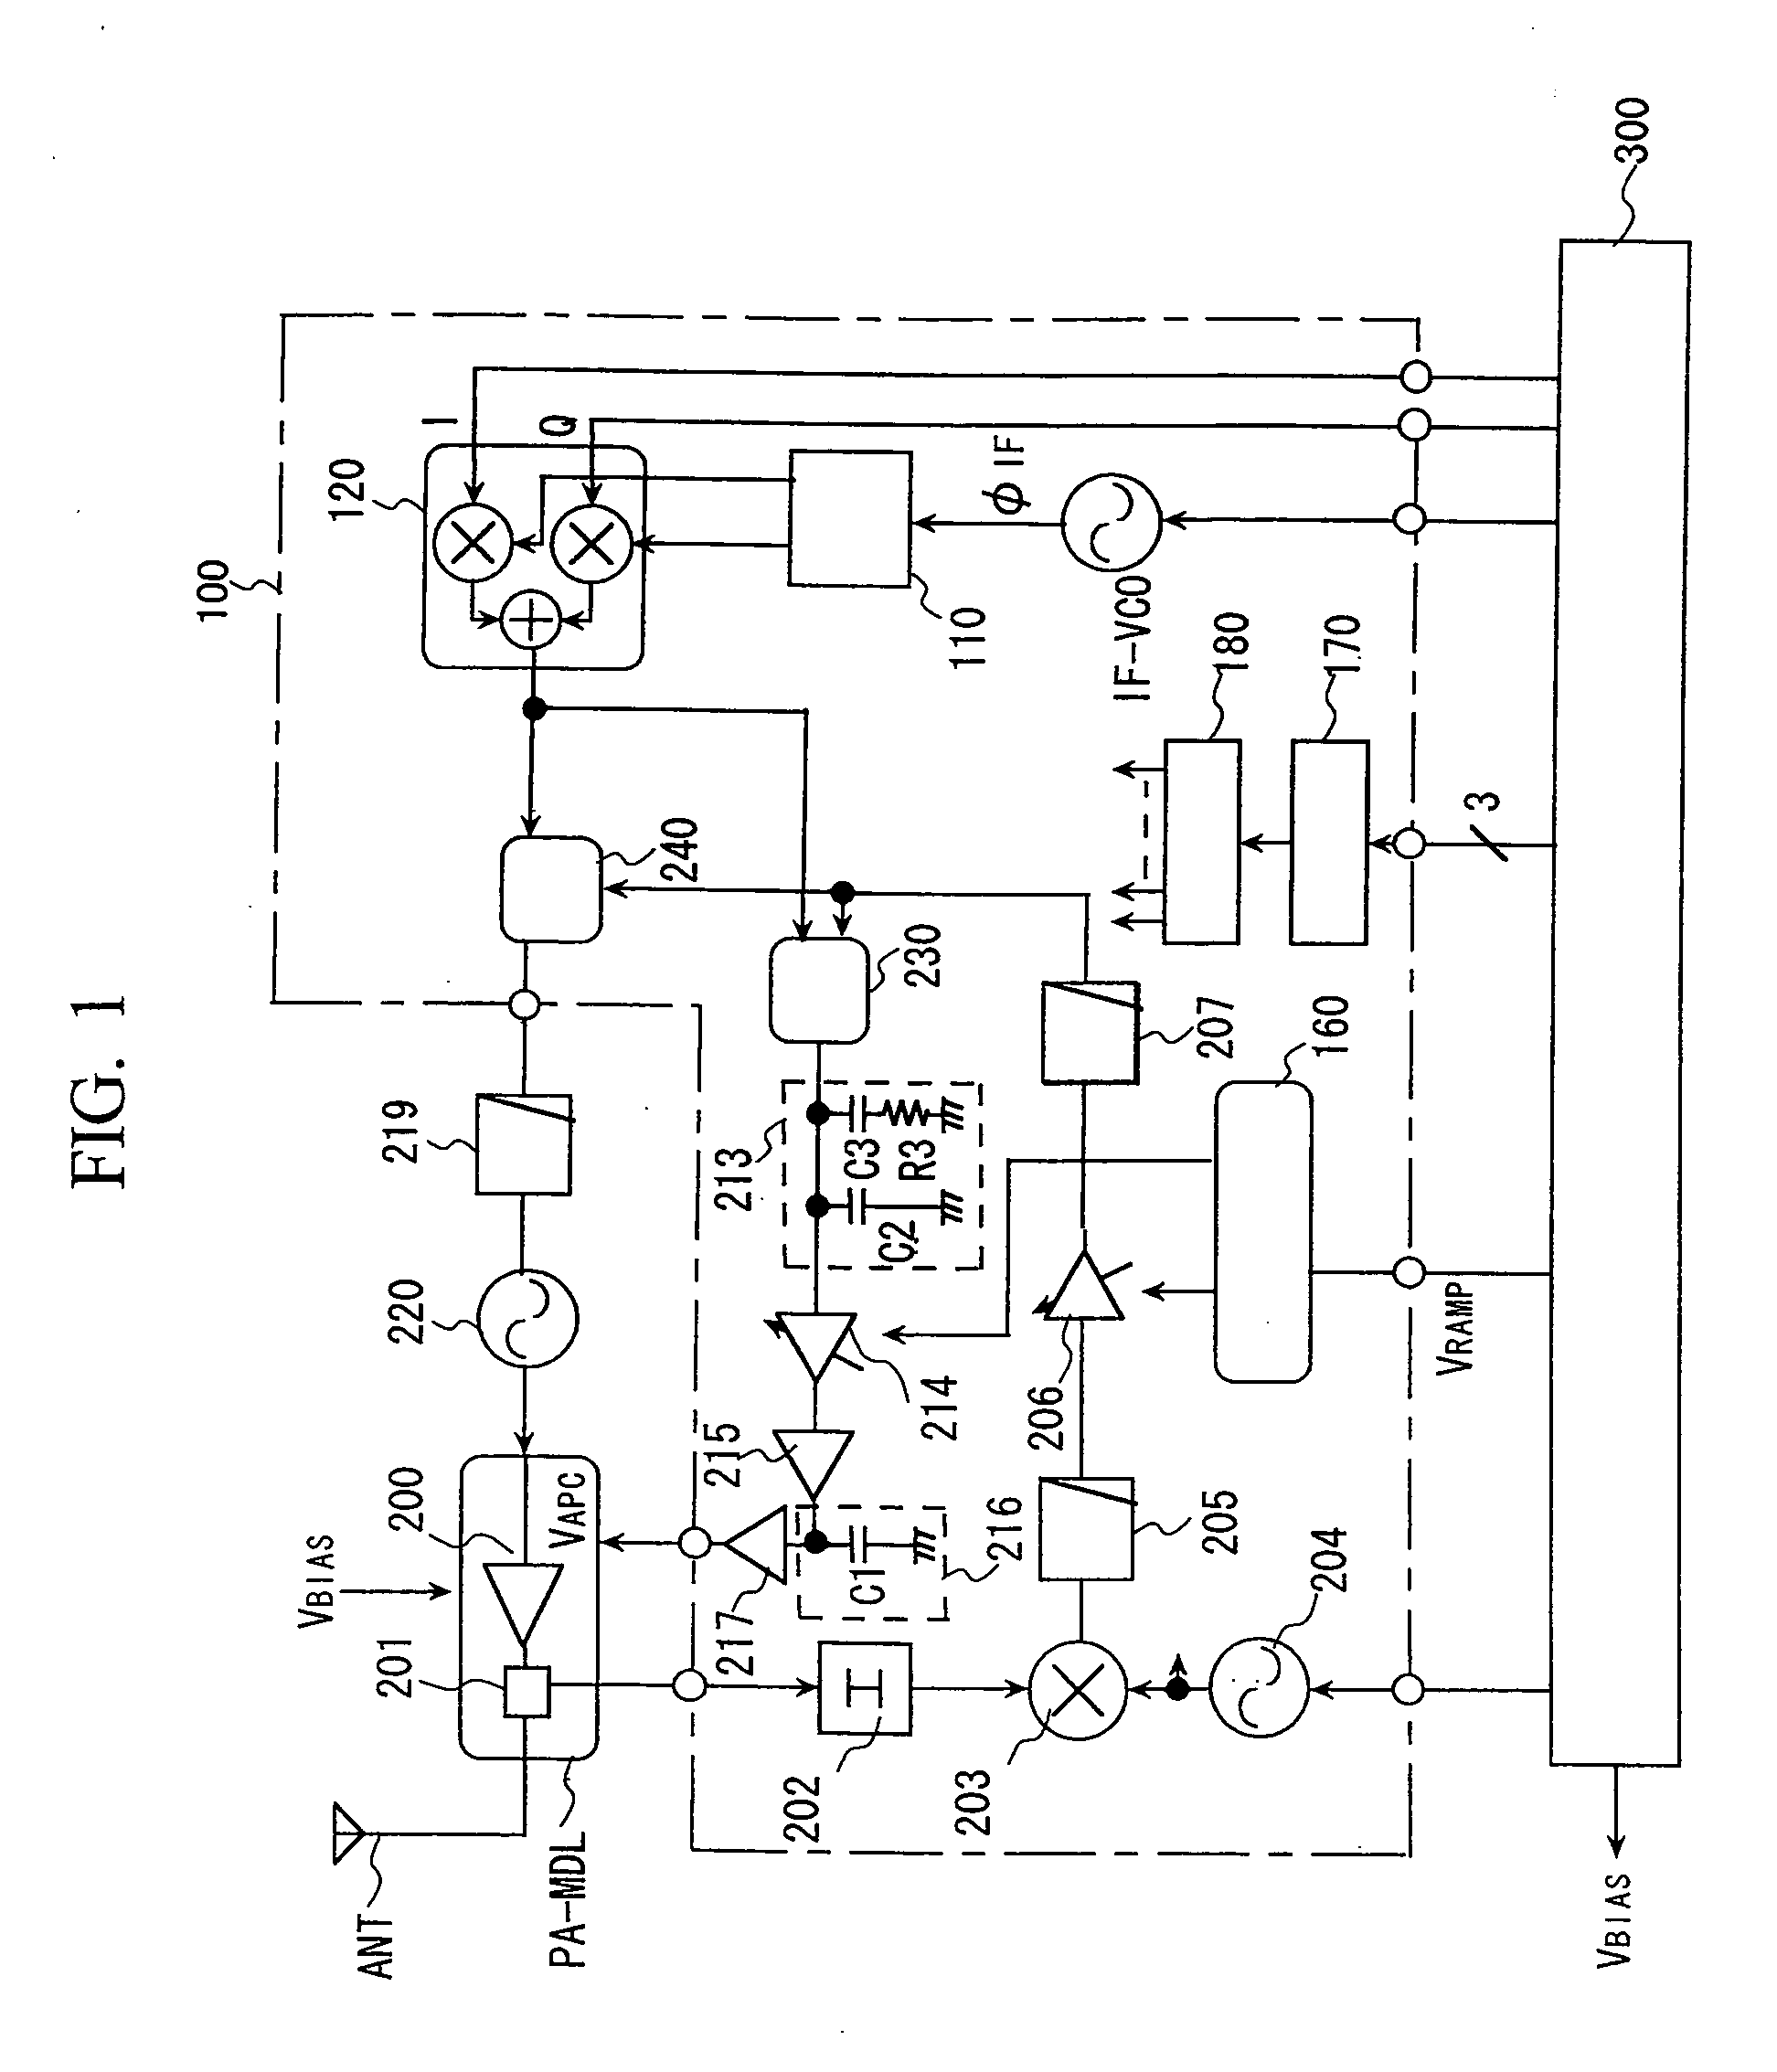 Transmitter and wireless communication apparatus using the transmitter